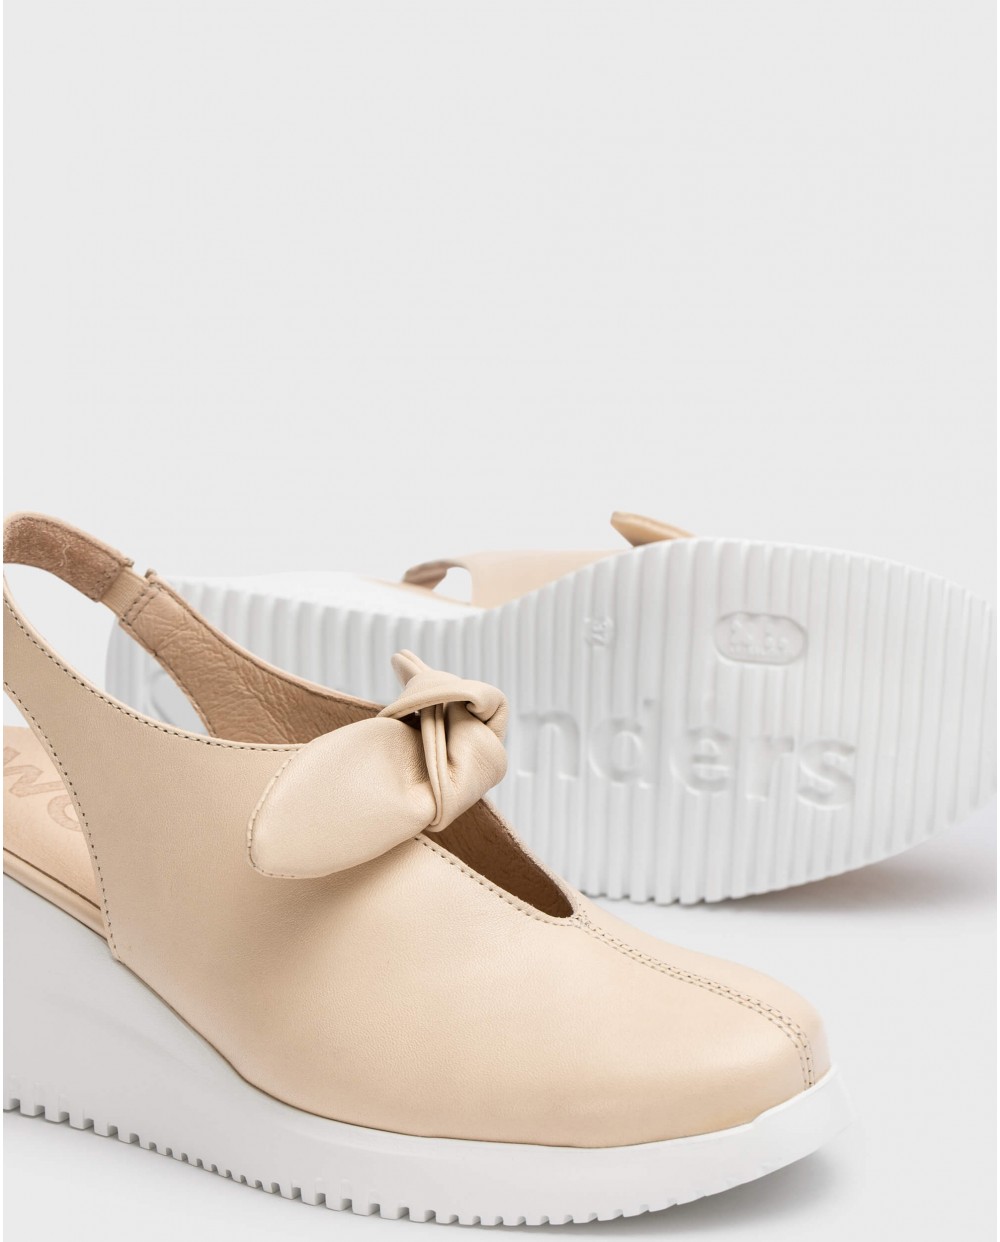 Wonders-Mujer-Zapato Orleans beige